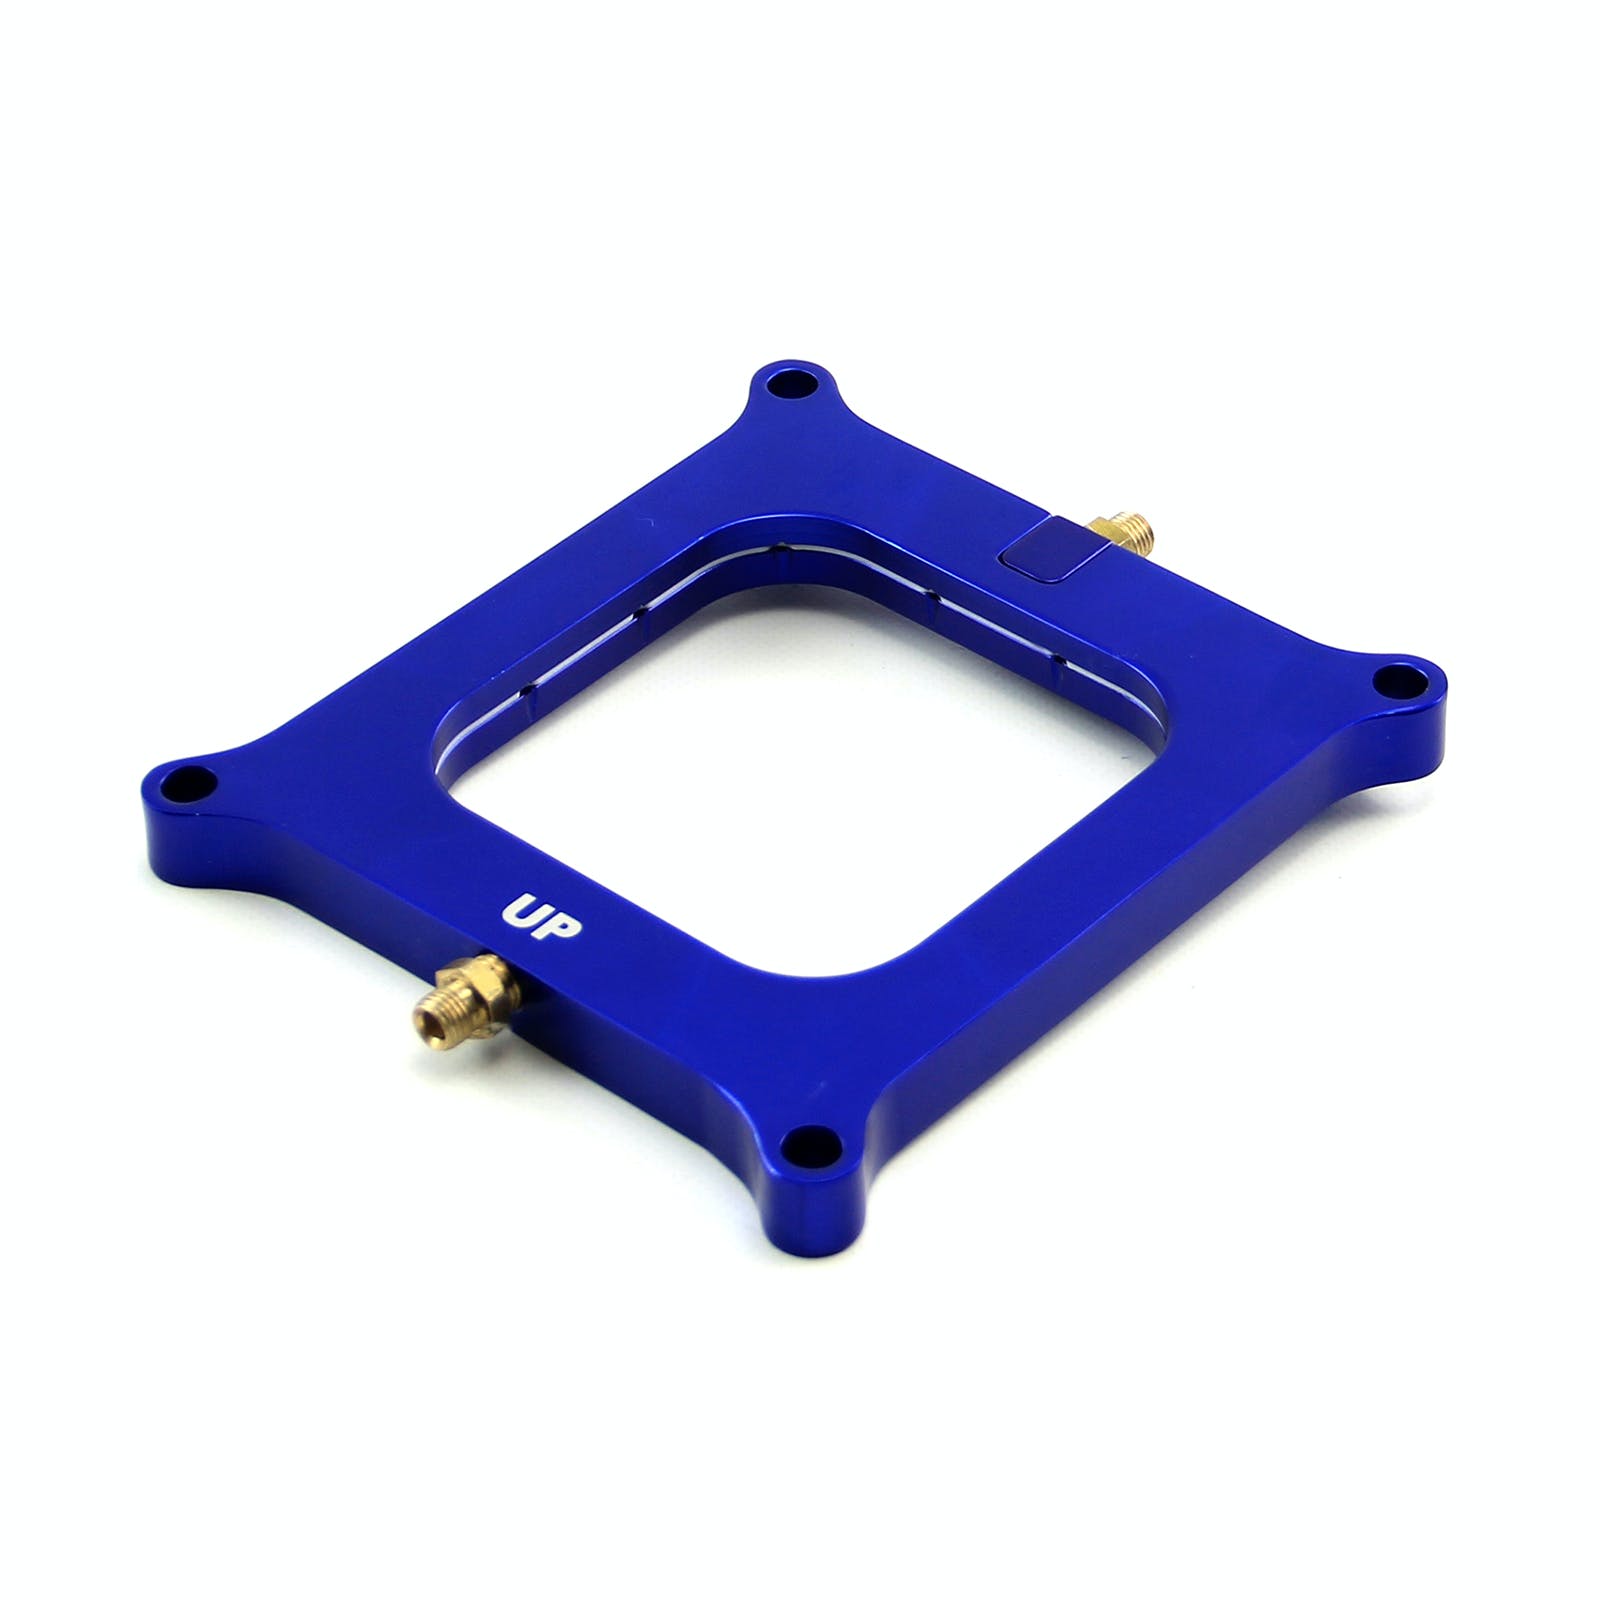 Speedmaster PCE151.1004 Nitrous Oxide 0.500 Blue Billet Square Bore Perimeter Injection Spacer Plate